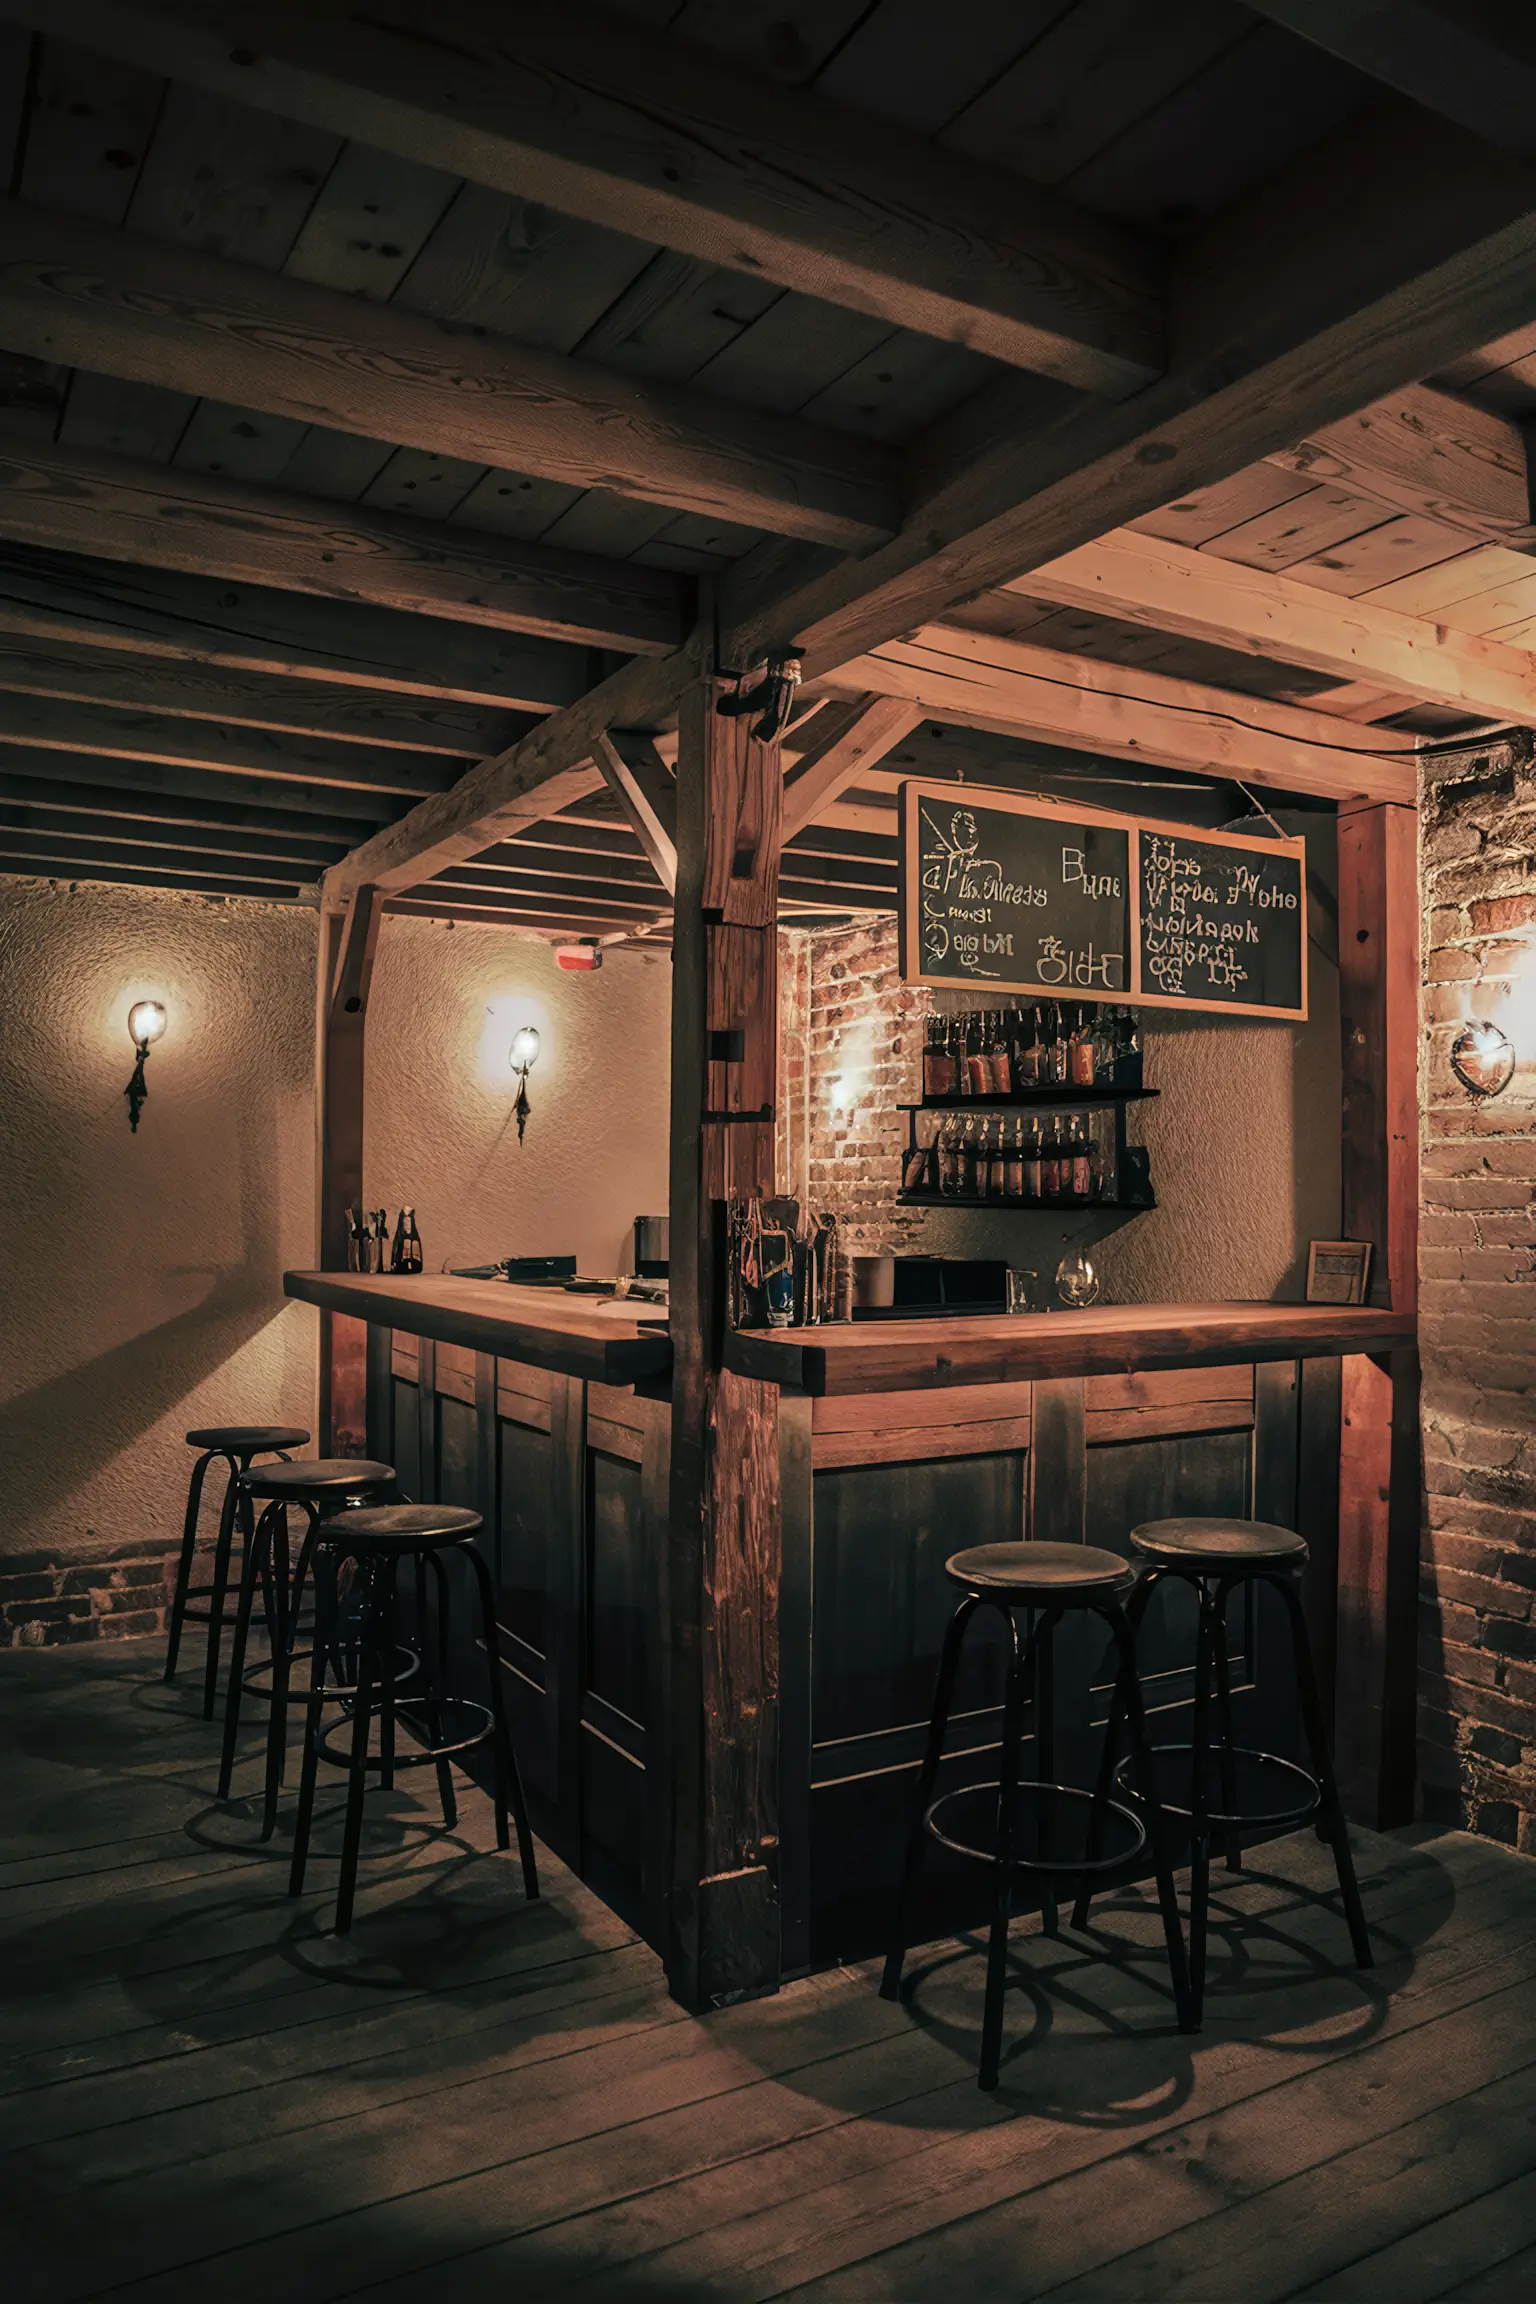 Rustic basement bar with wooden beams and exposed brick walls.